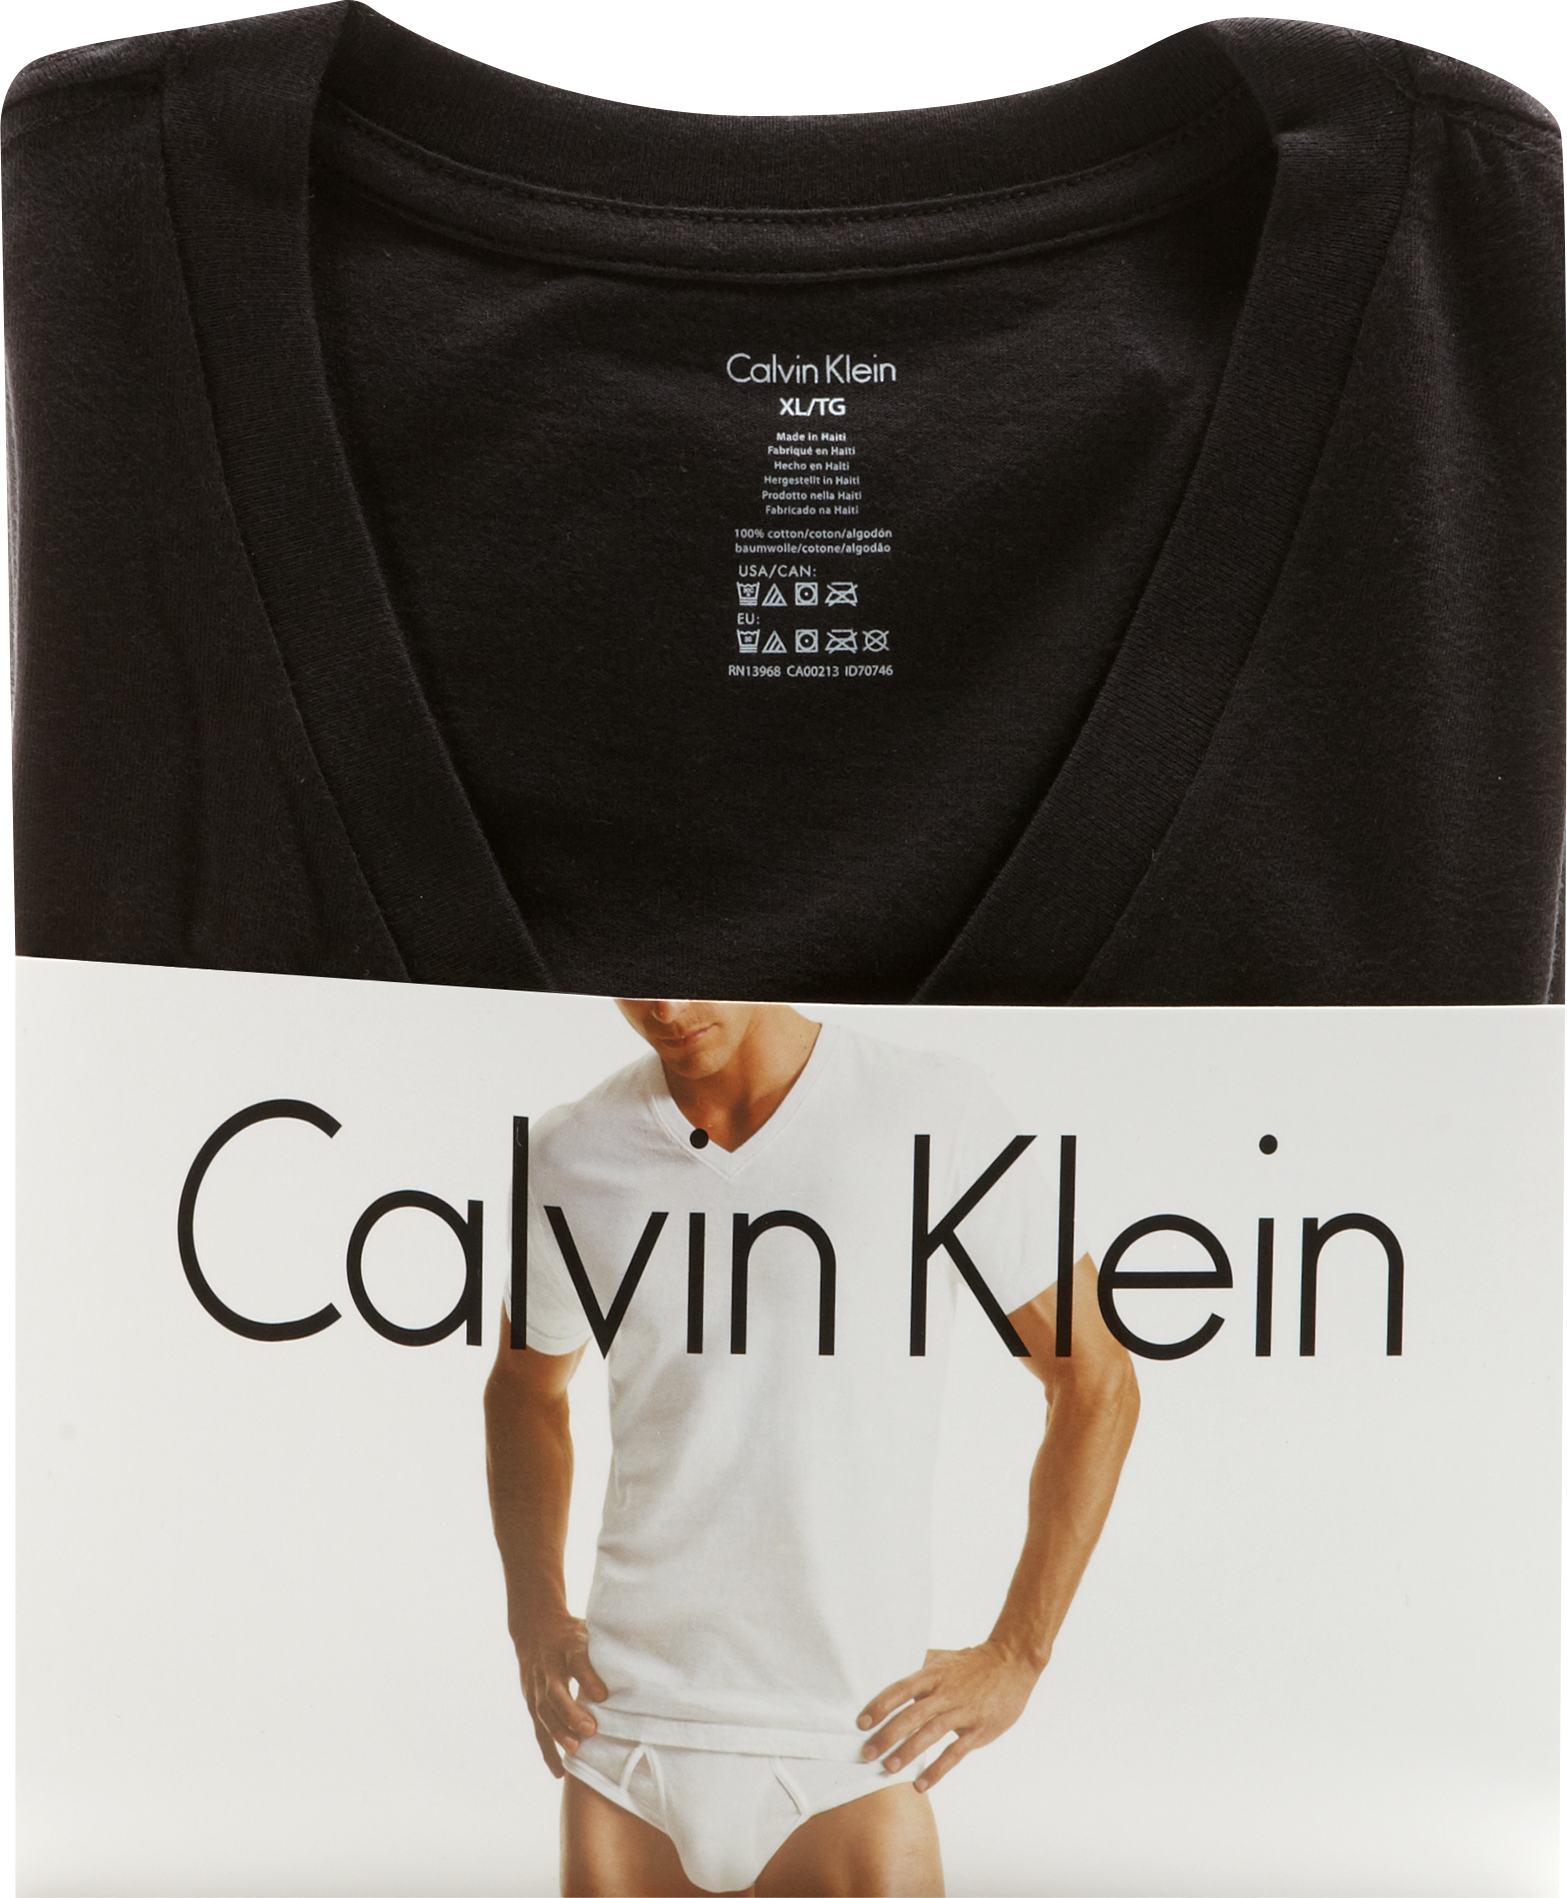 Watt optillen tyfoon Calvin Klein Black Slim-Fit V-Neck T-Shirts (Three-Pack) - Men's Sale |  Men's Wearhouse